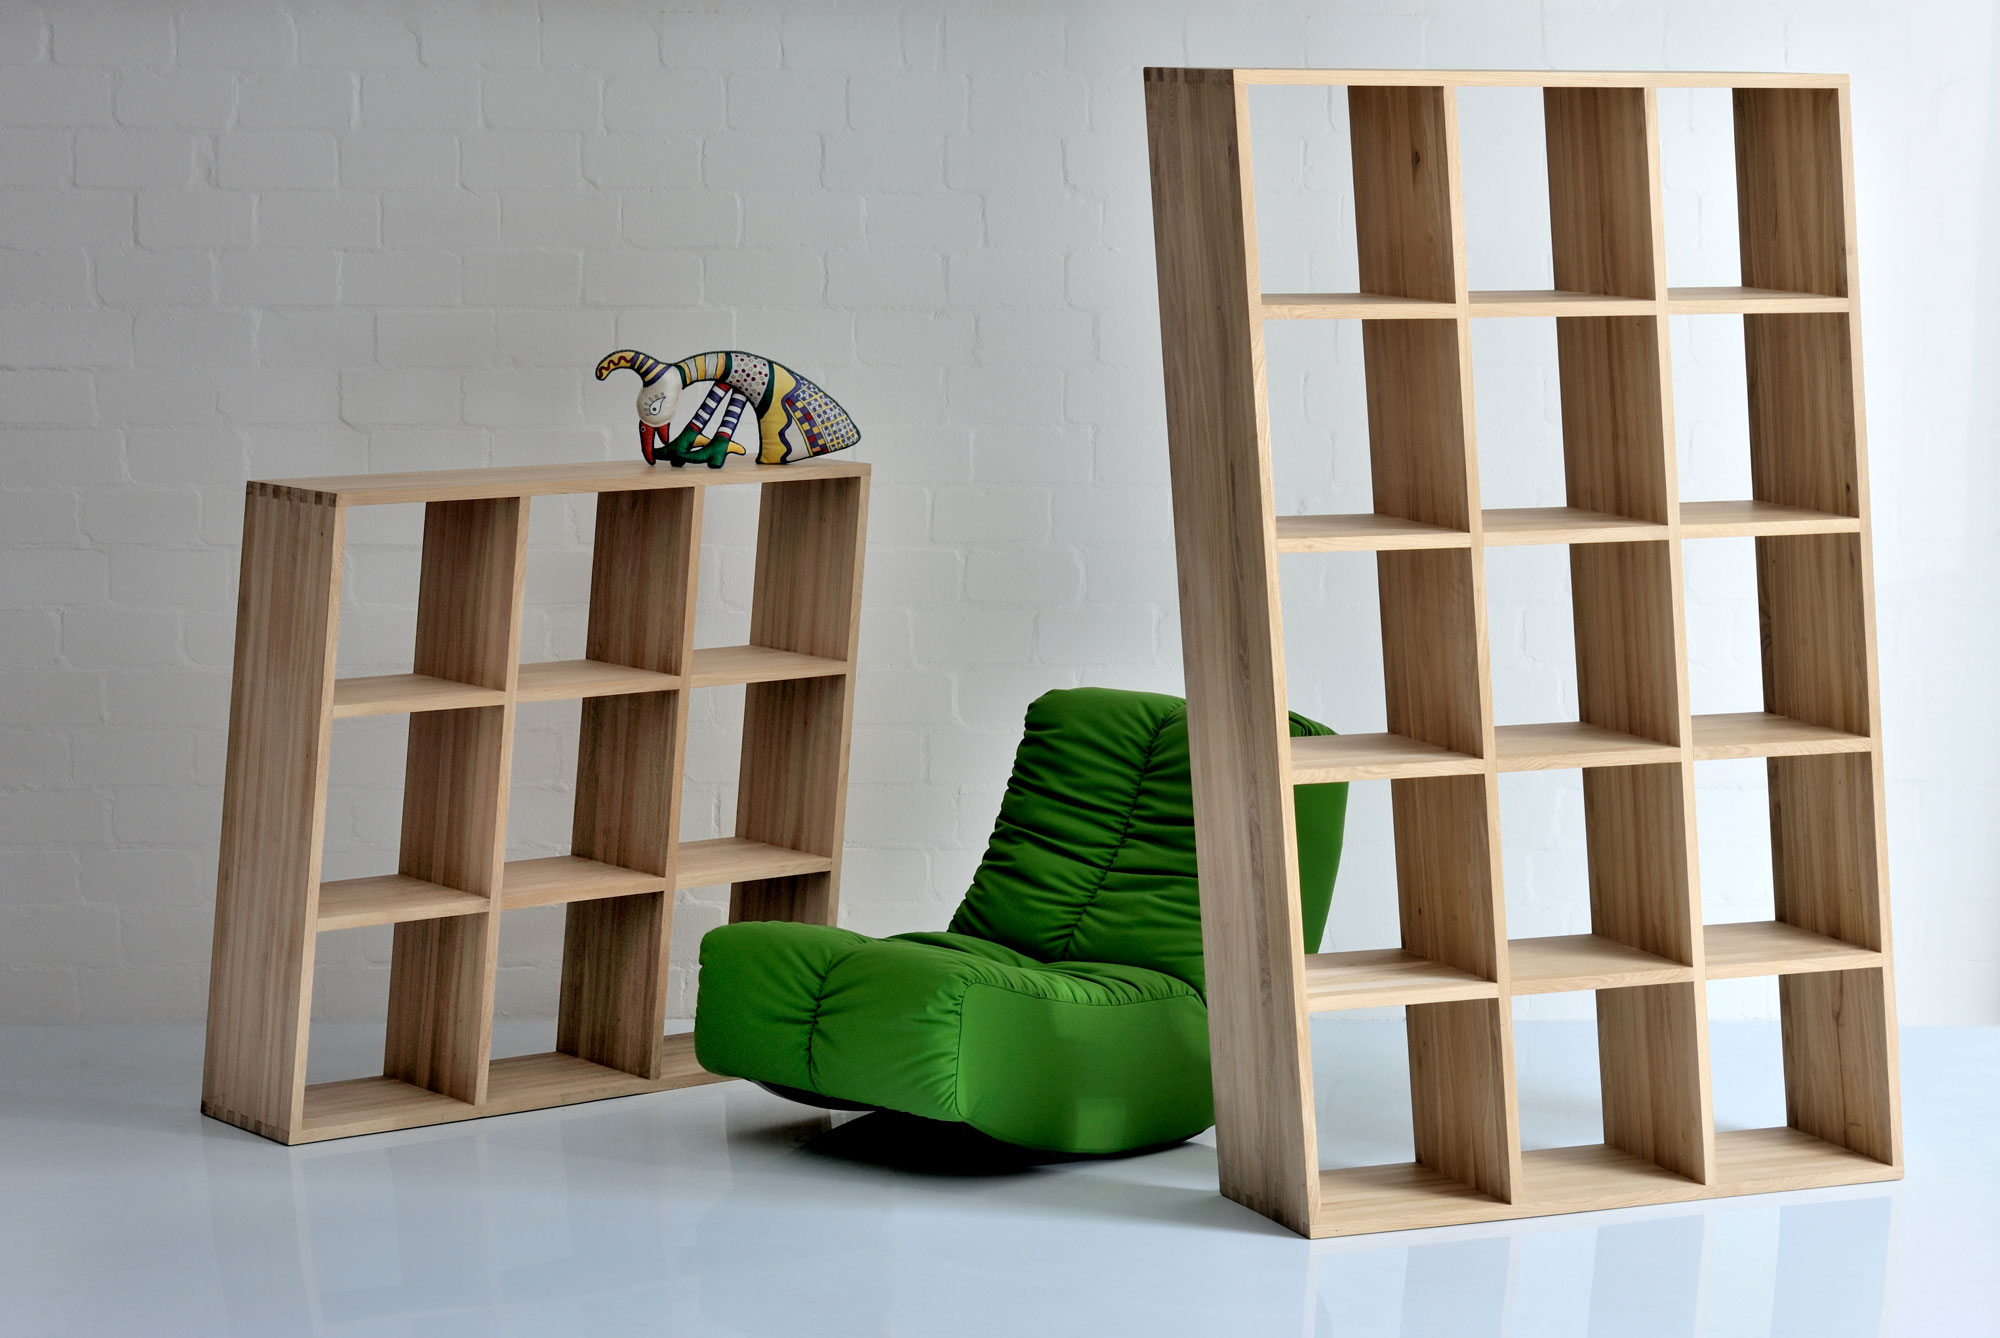 Wooden Designer Shelf PISA vd0924 custom made in solid wood by vitamin design